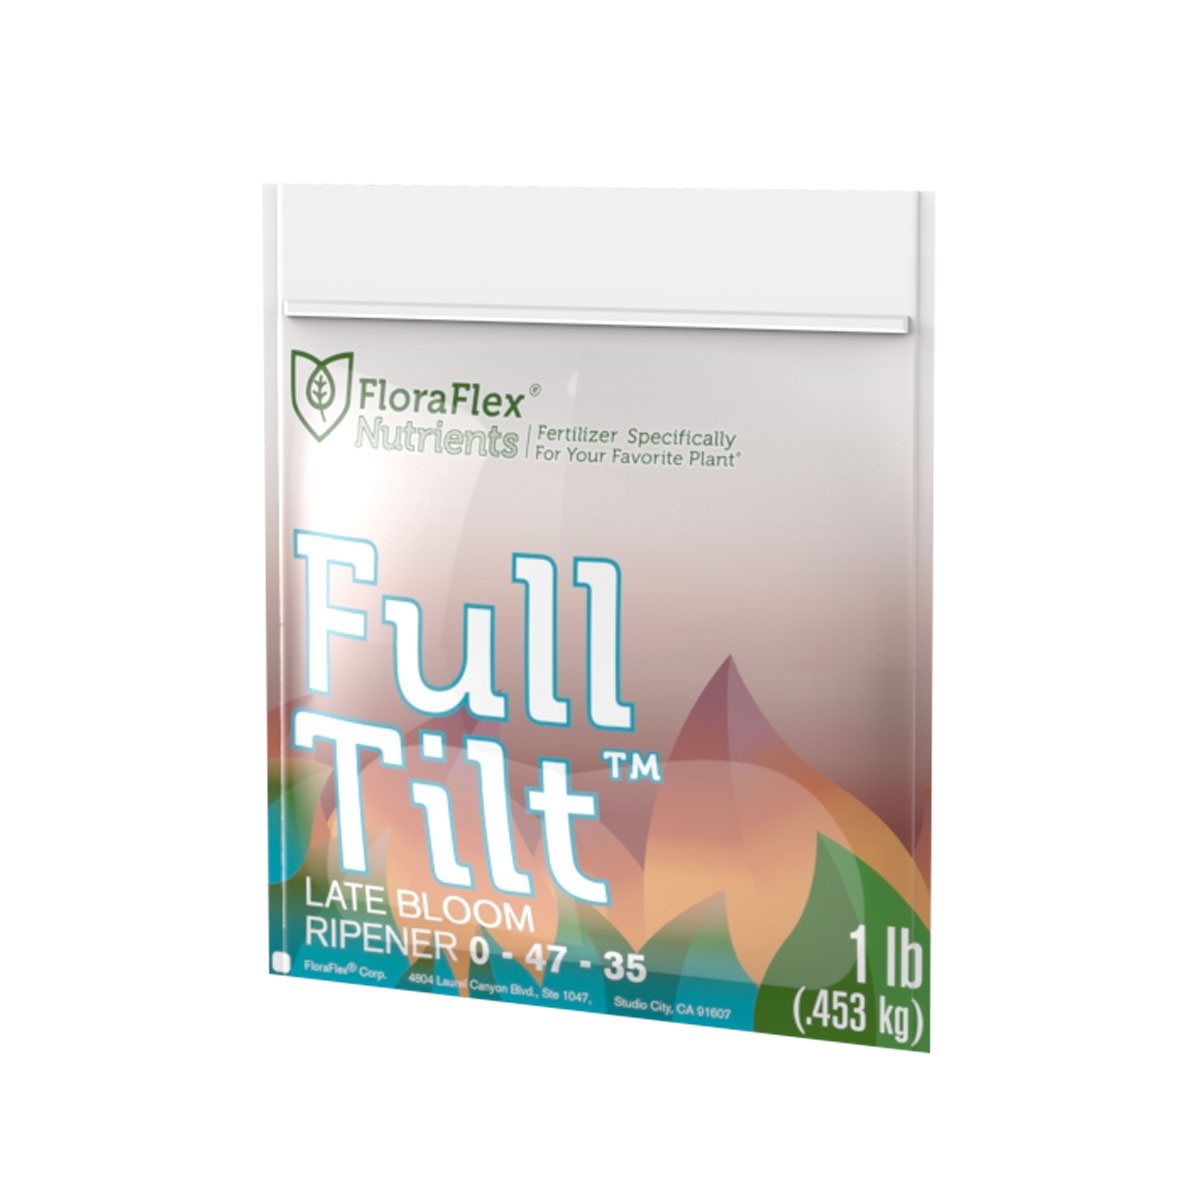 Product Image:Nutriments FloraFlex Full Tilt